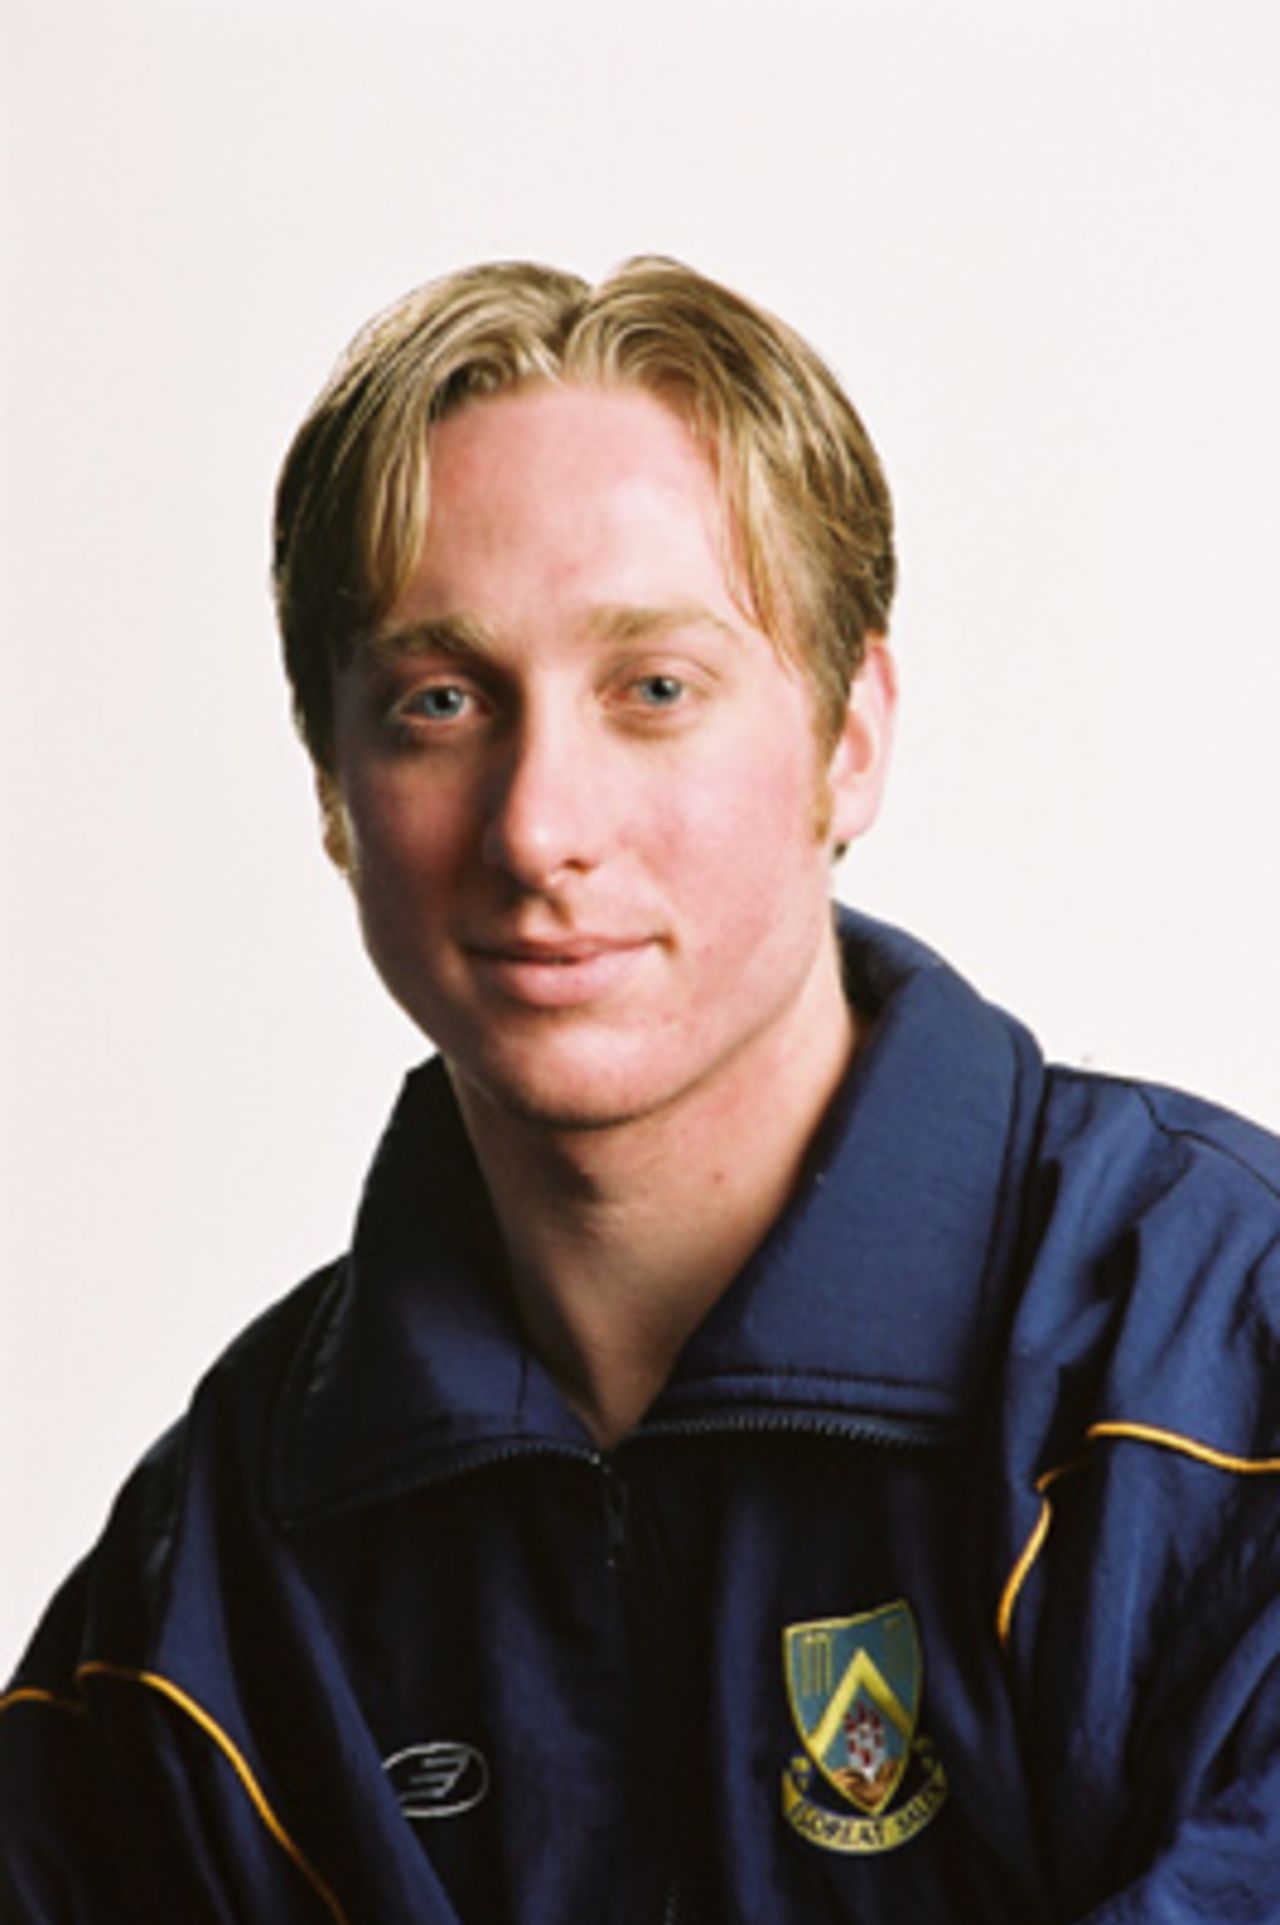 Portrait of James McMillan - Otago squad member for the 2000/01 season